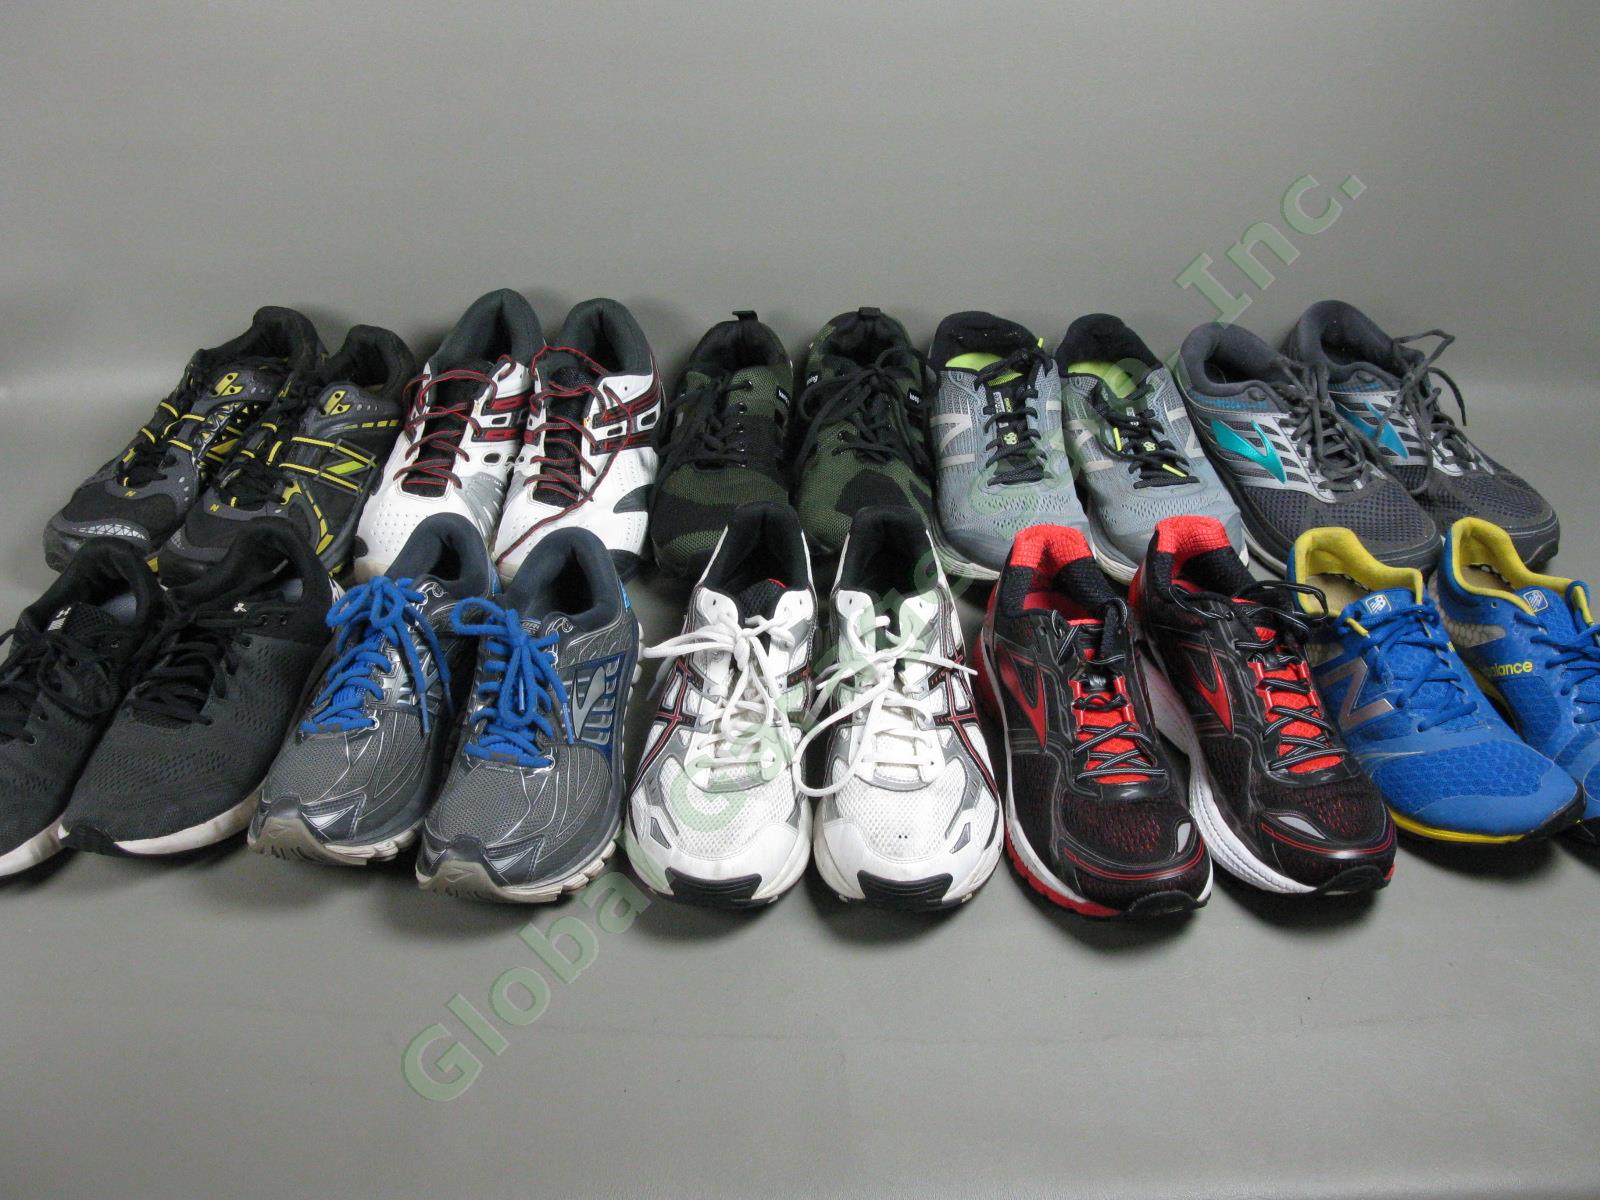 10 Pairs Mens Sneaker Shoe Lot New Balance Under Armour Asics Brooks Size 8.5-11